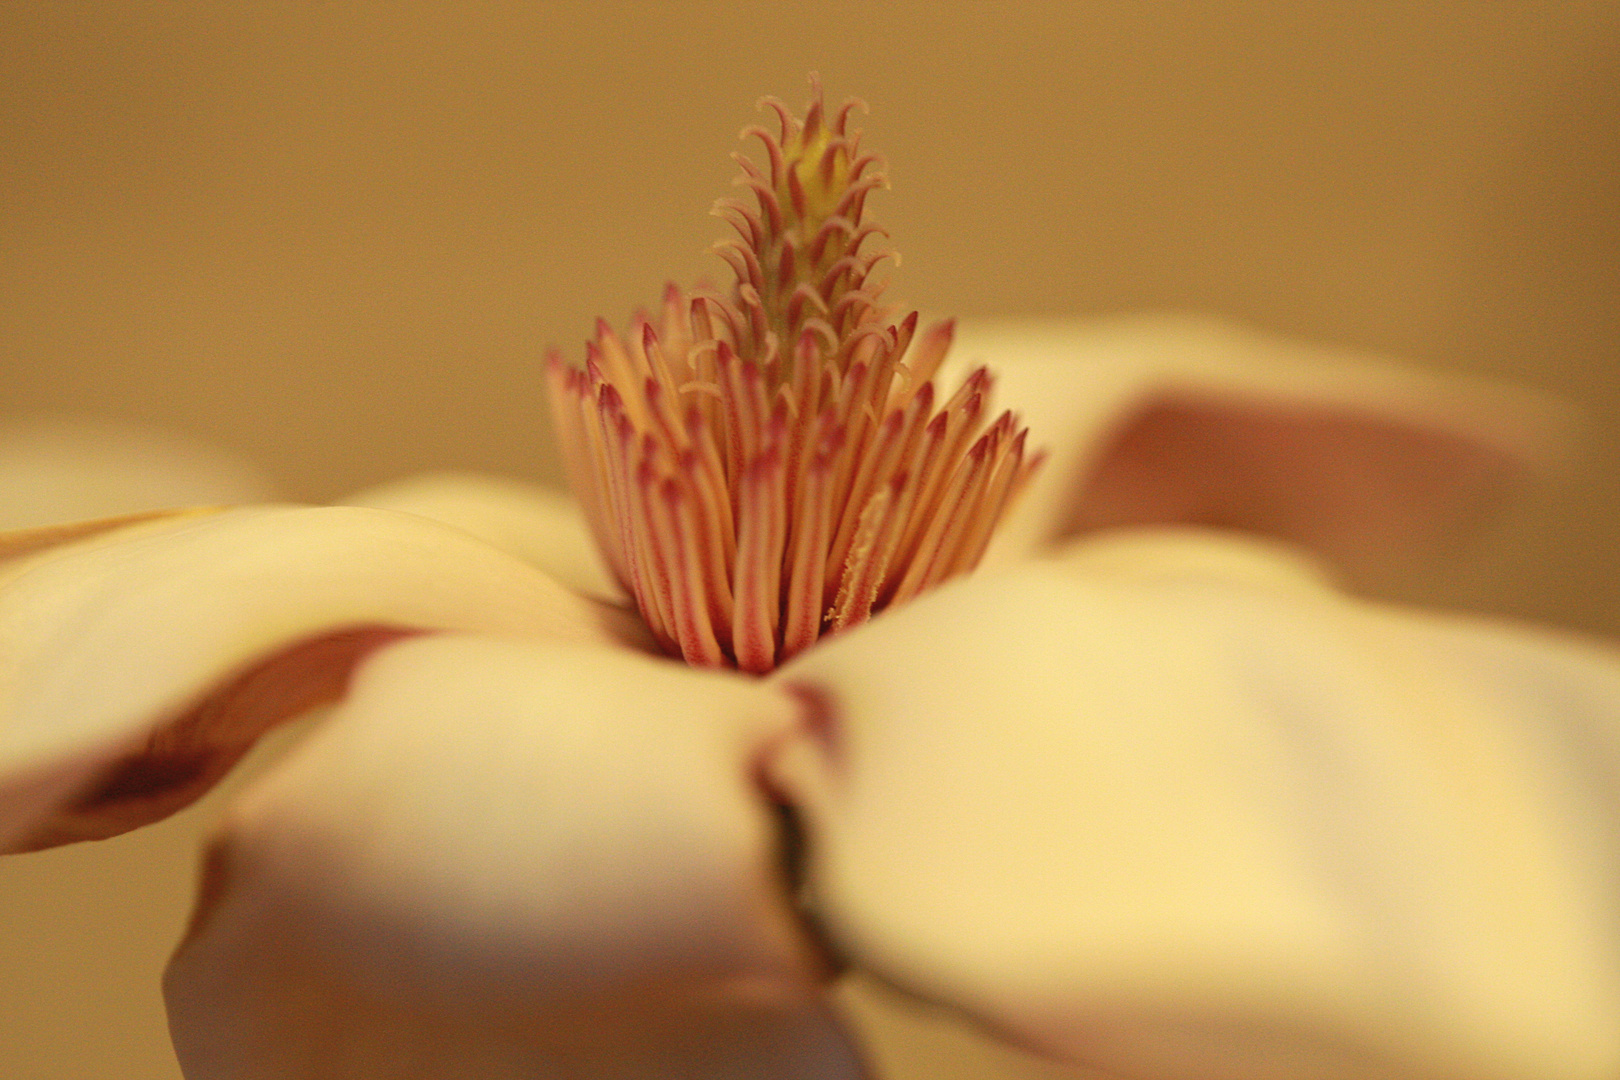 Magnolia stellata makro